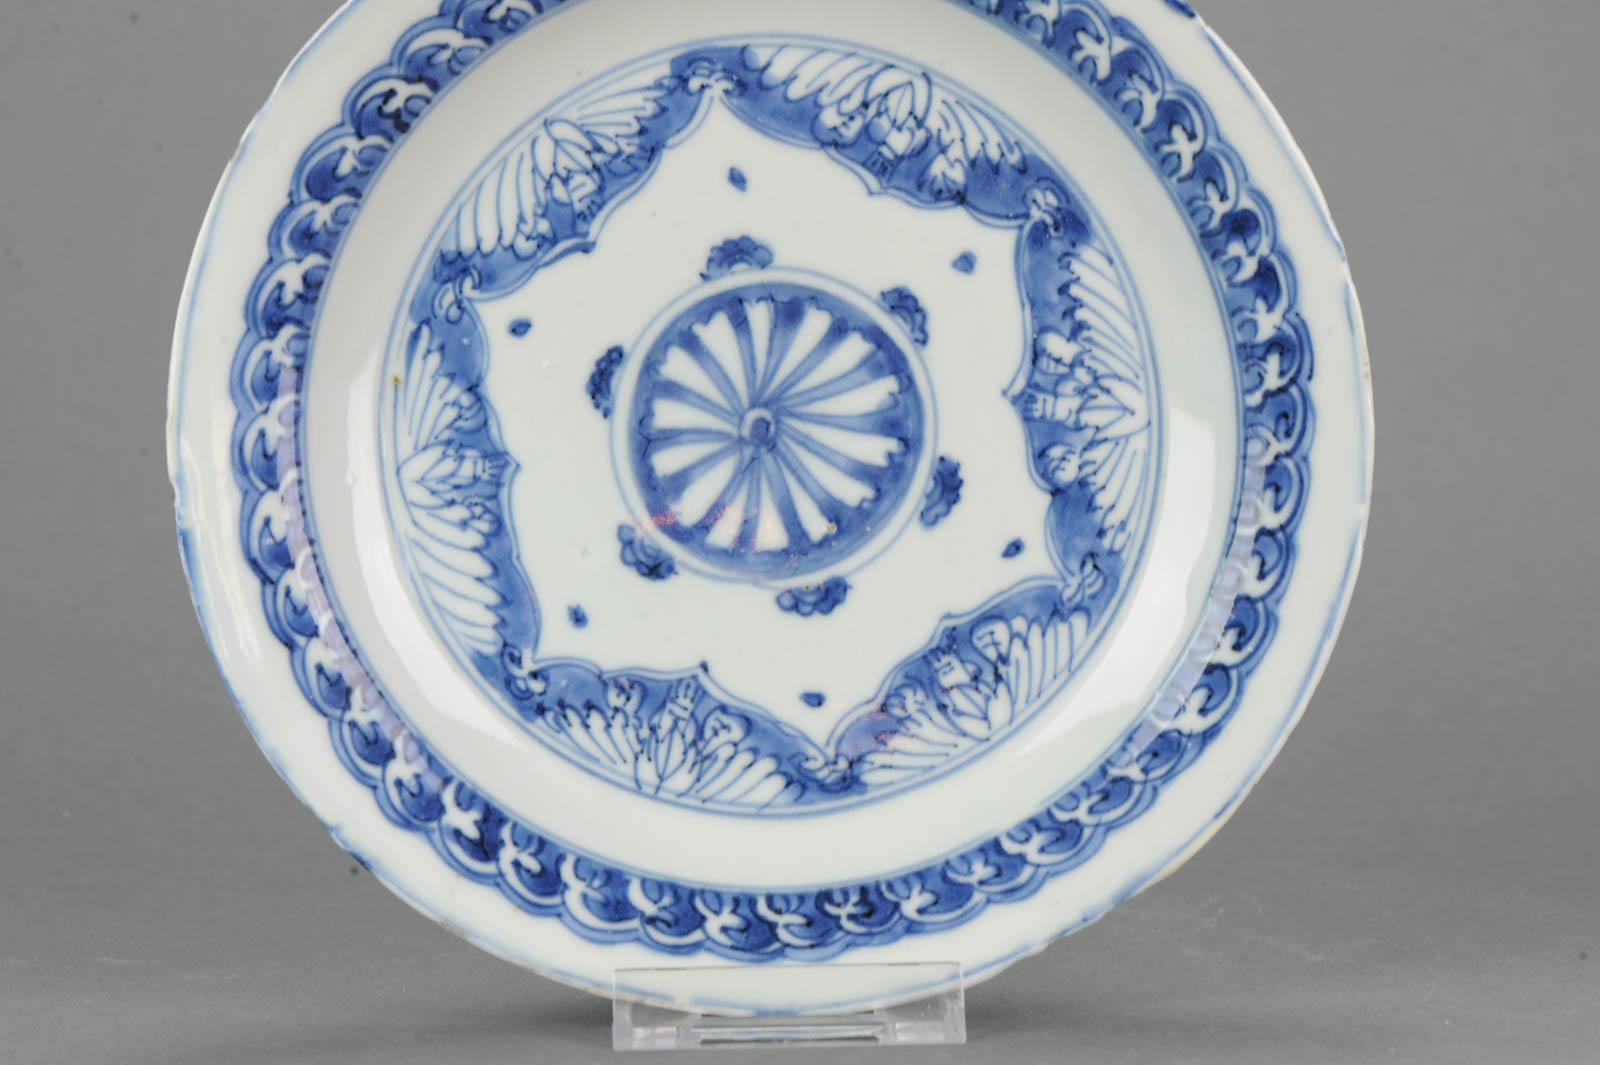 Chinese Antique 16th Century Porcelain Ming Jiajing Wanli Transitional Buddhist Plate